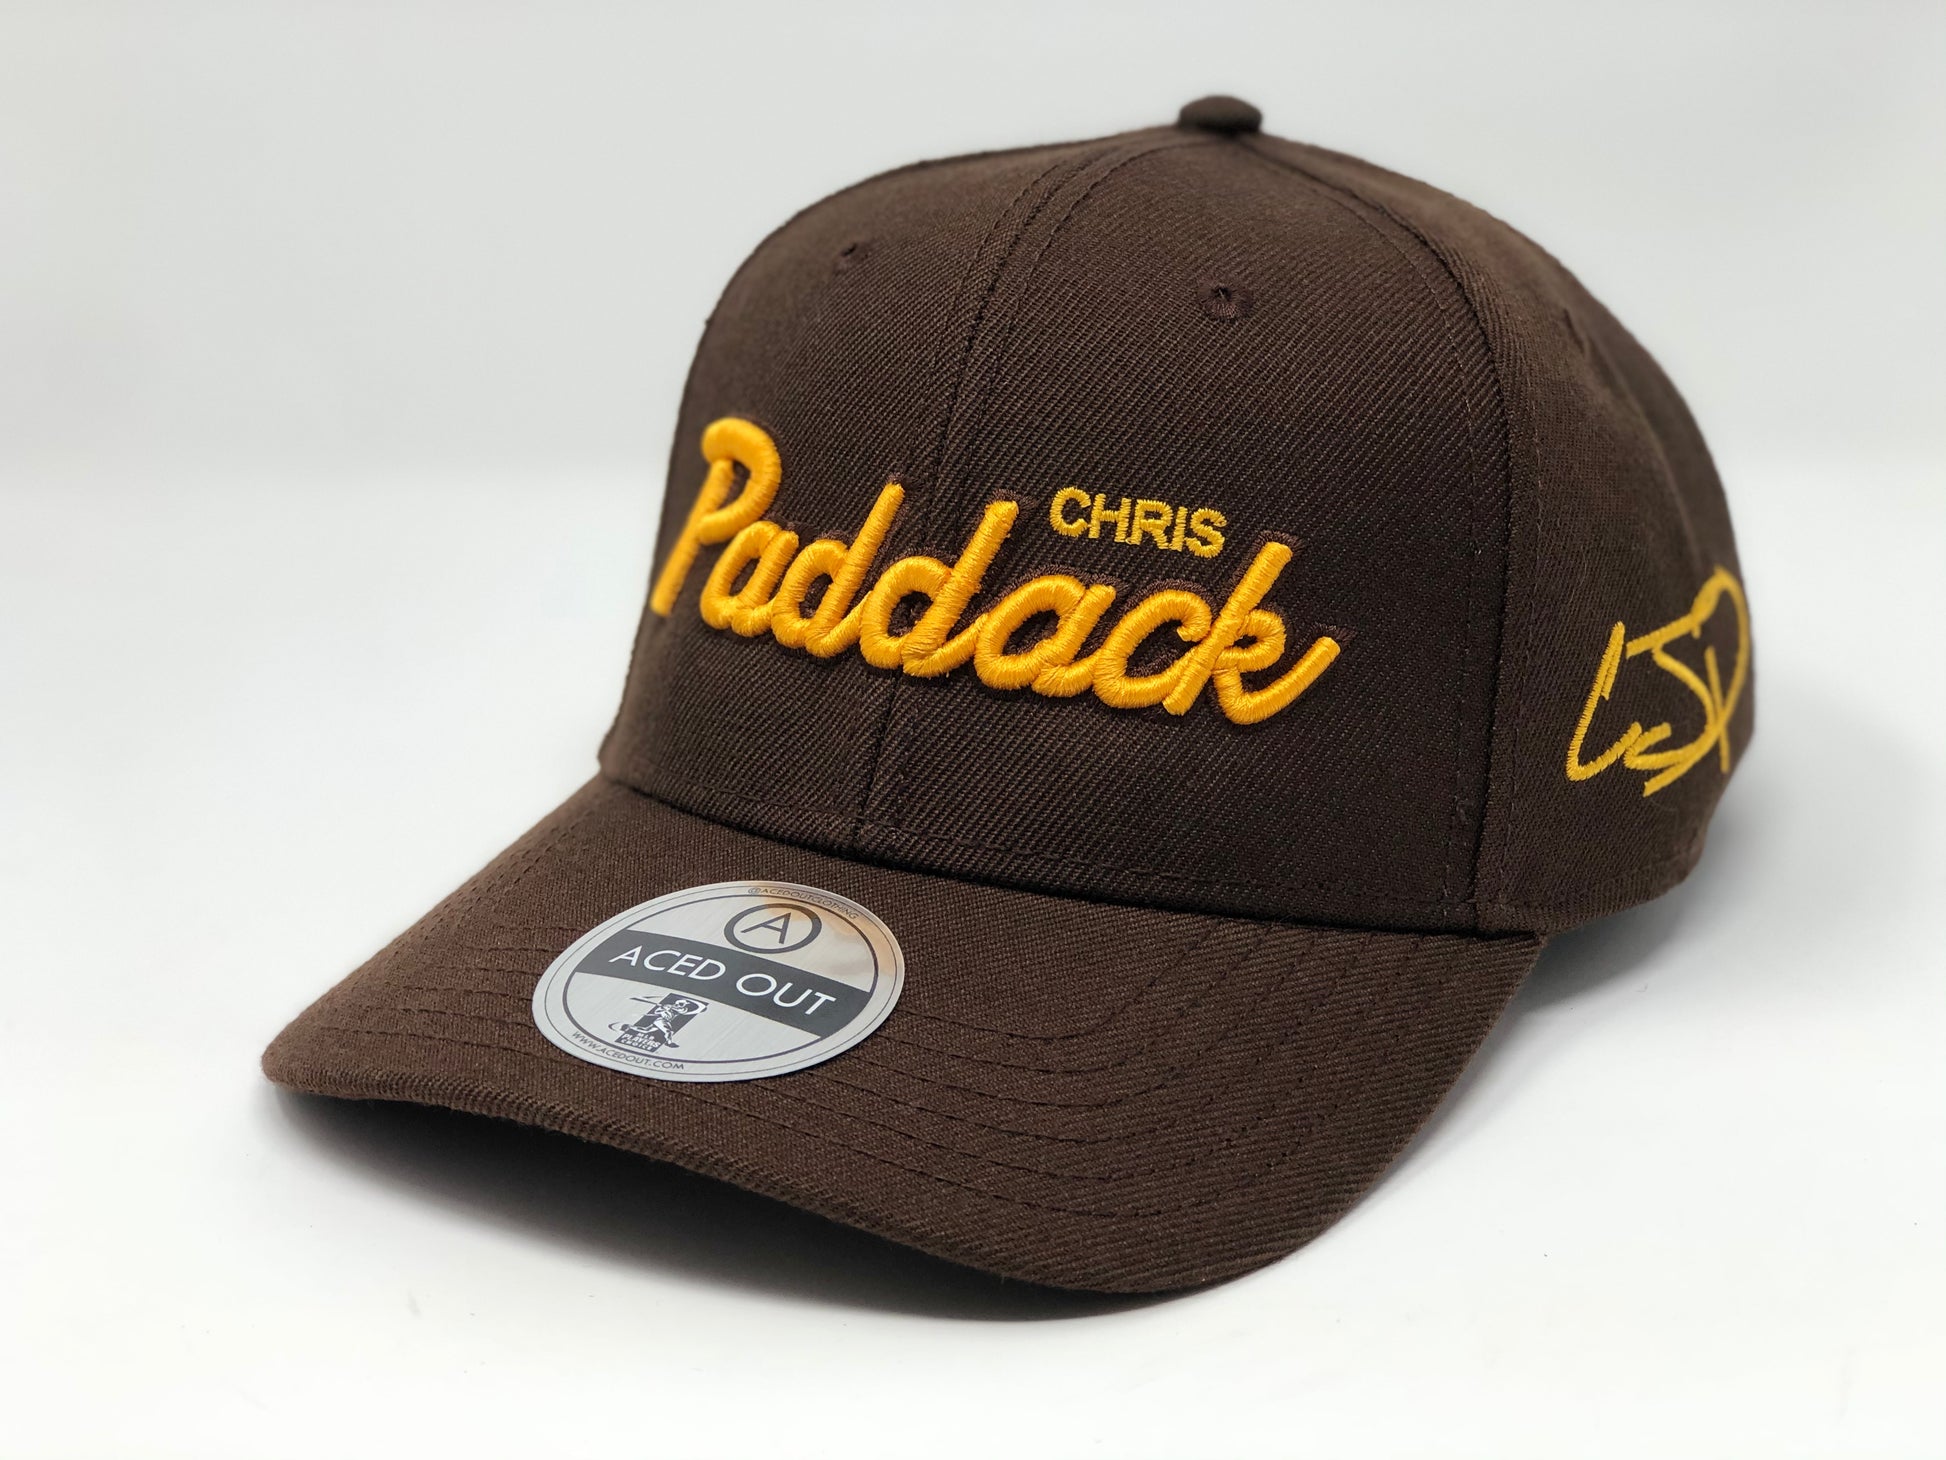 Chris Paddack Script Hat - Curved Snapback - Brown